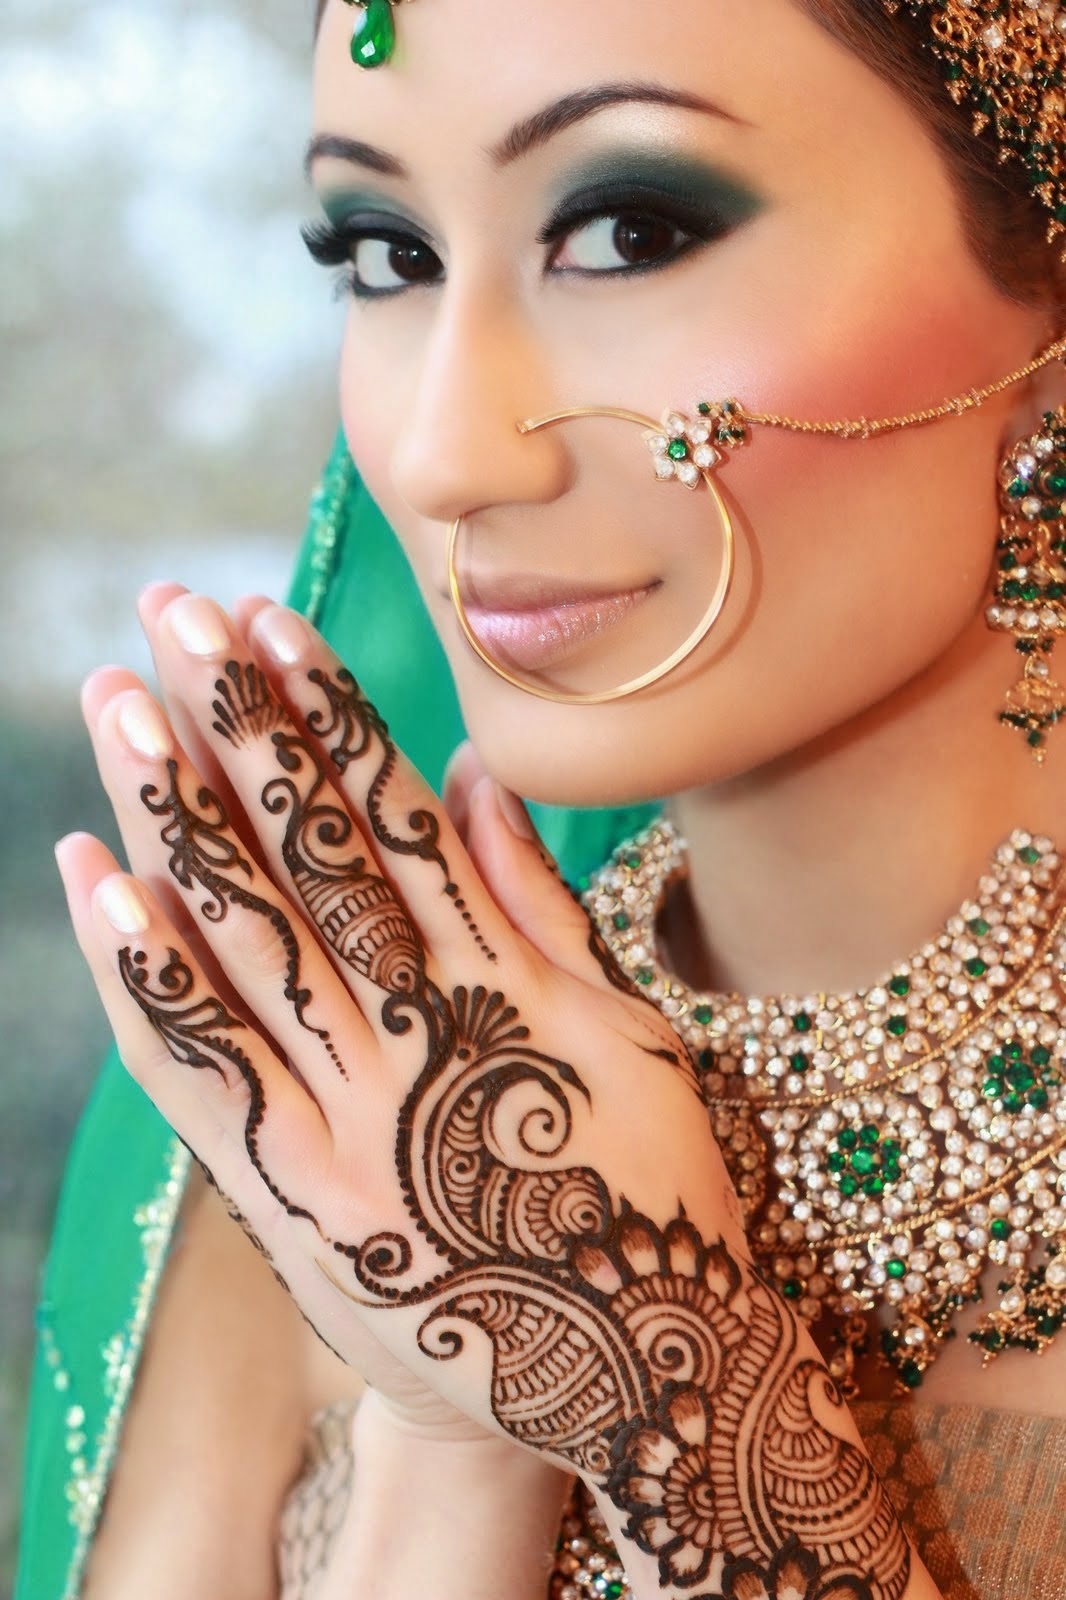 Urdu Blogs All About Urdu Posts Wallpaper Indian Bridle Makeup